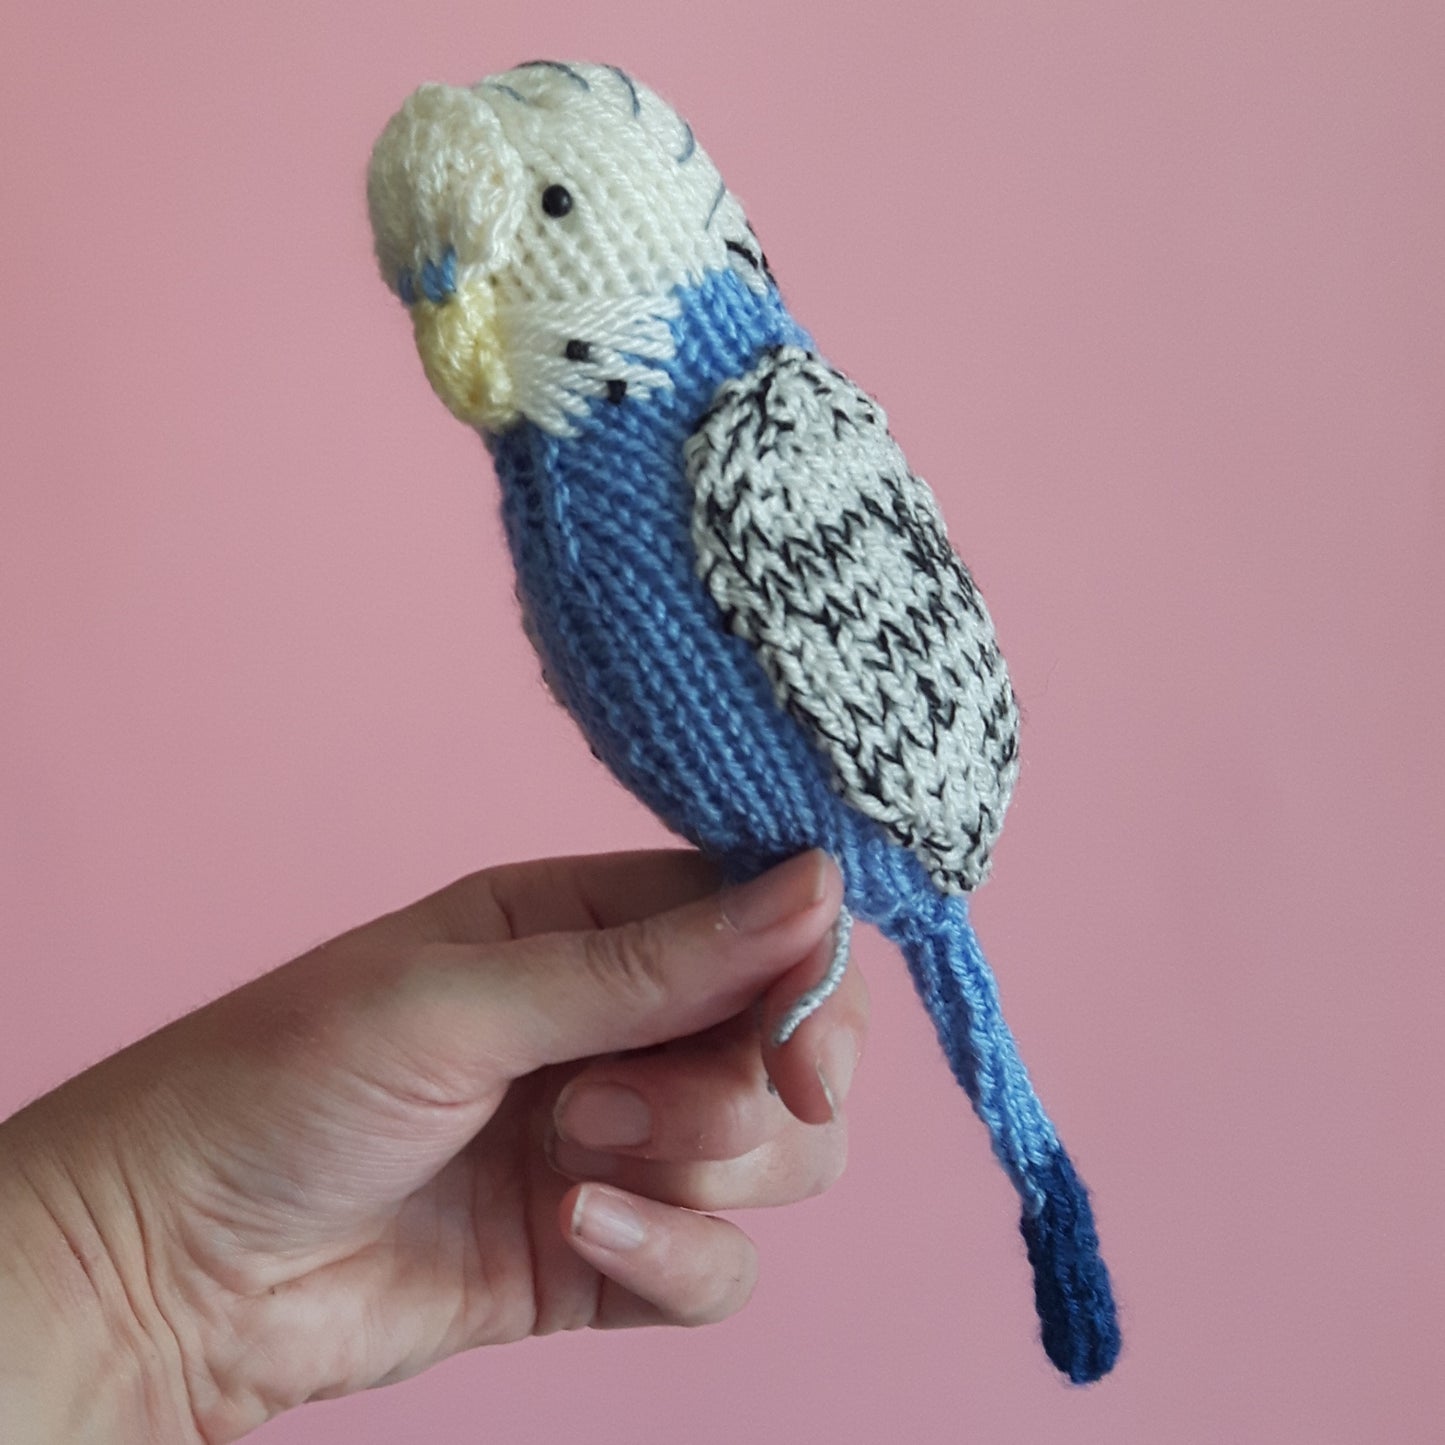 Sparky the Budgie bird knitting kit